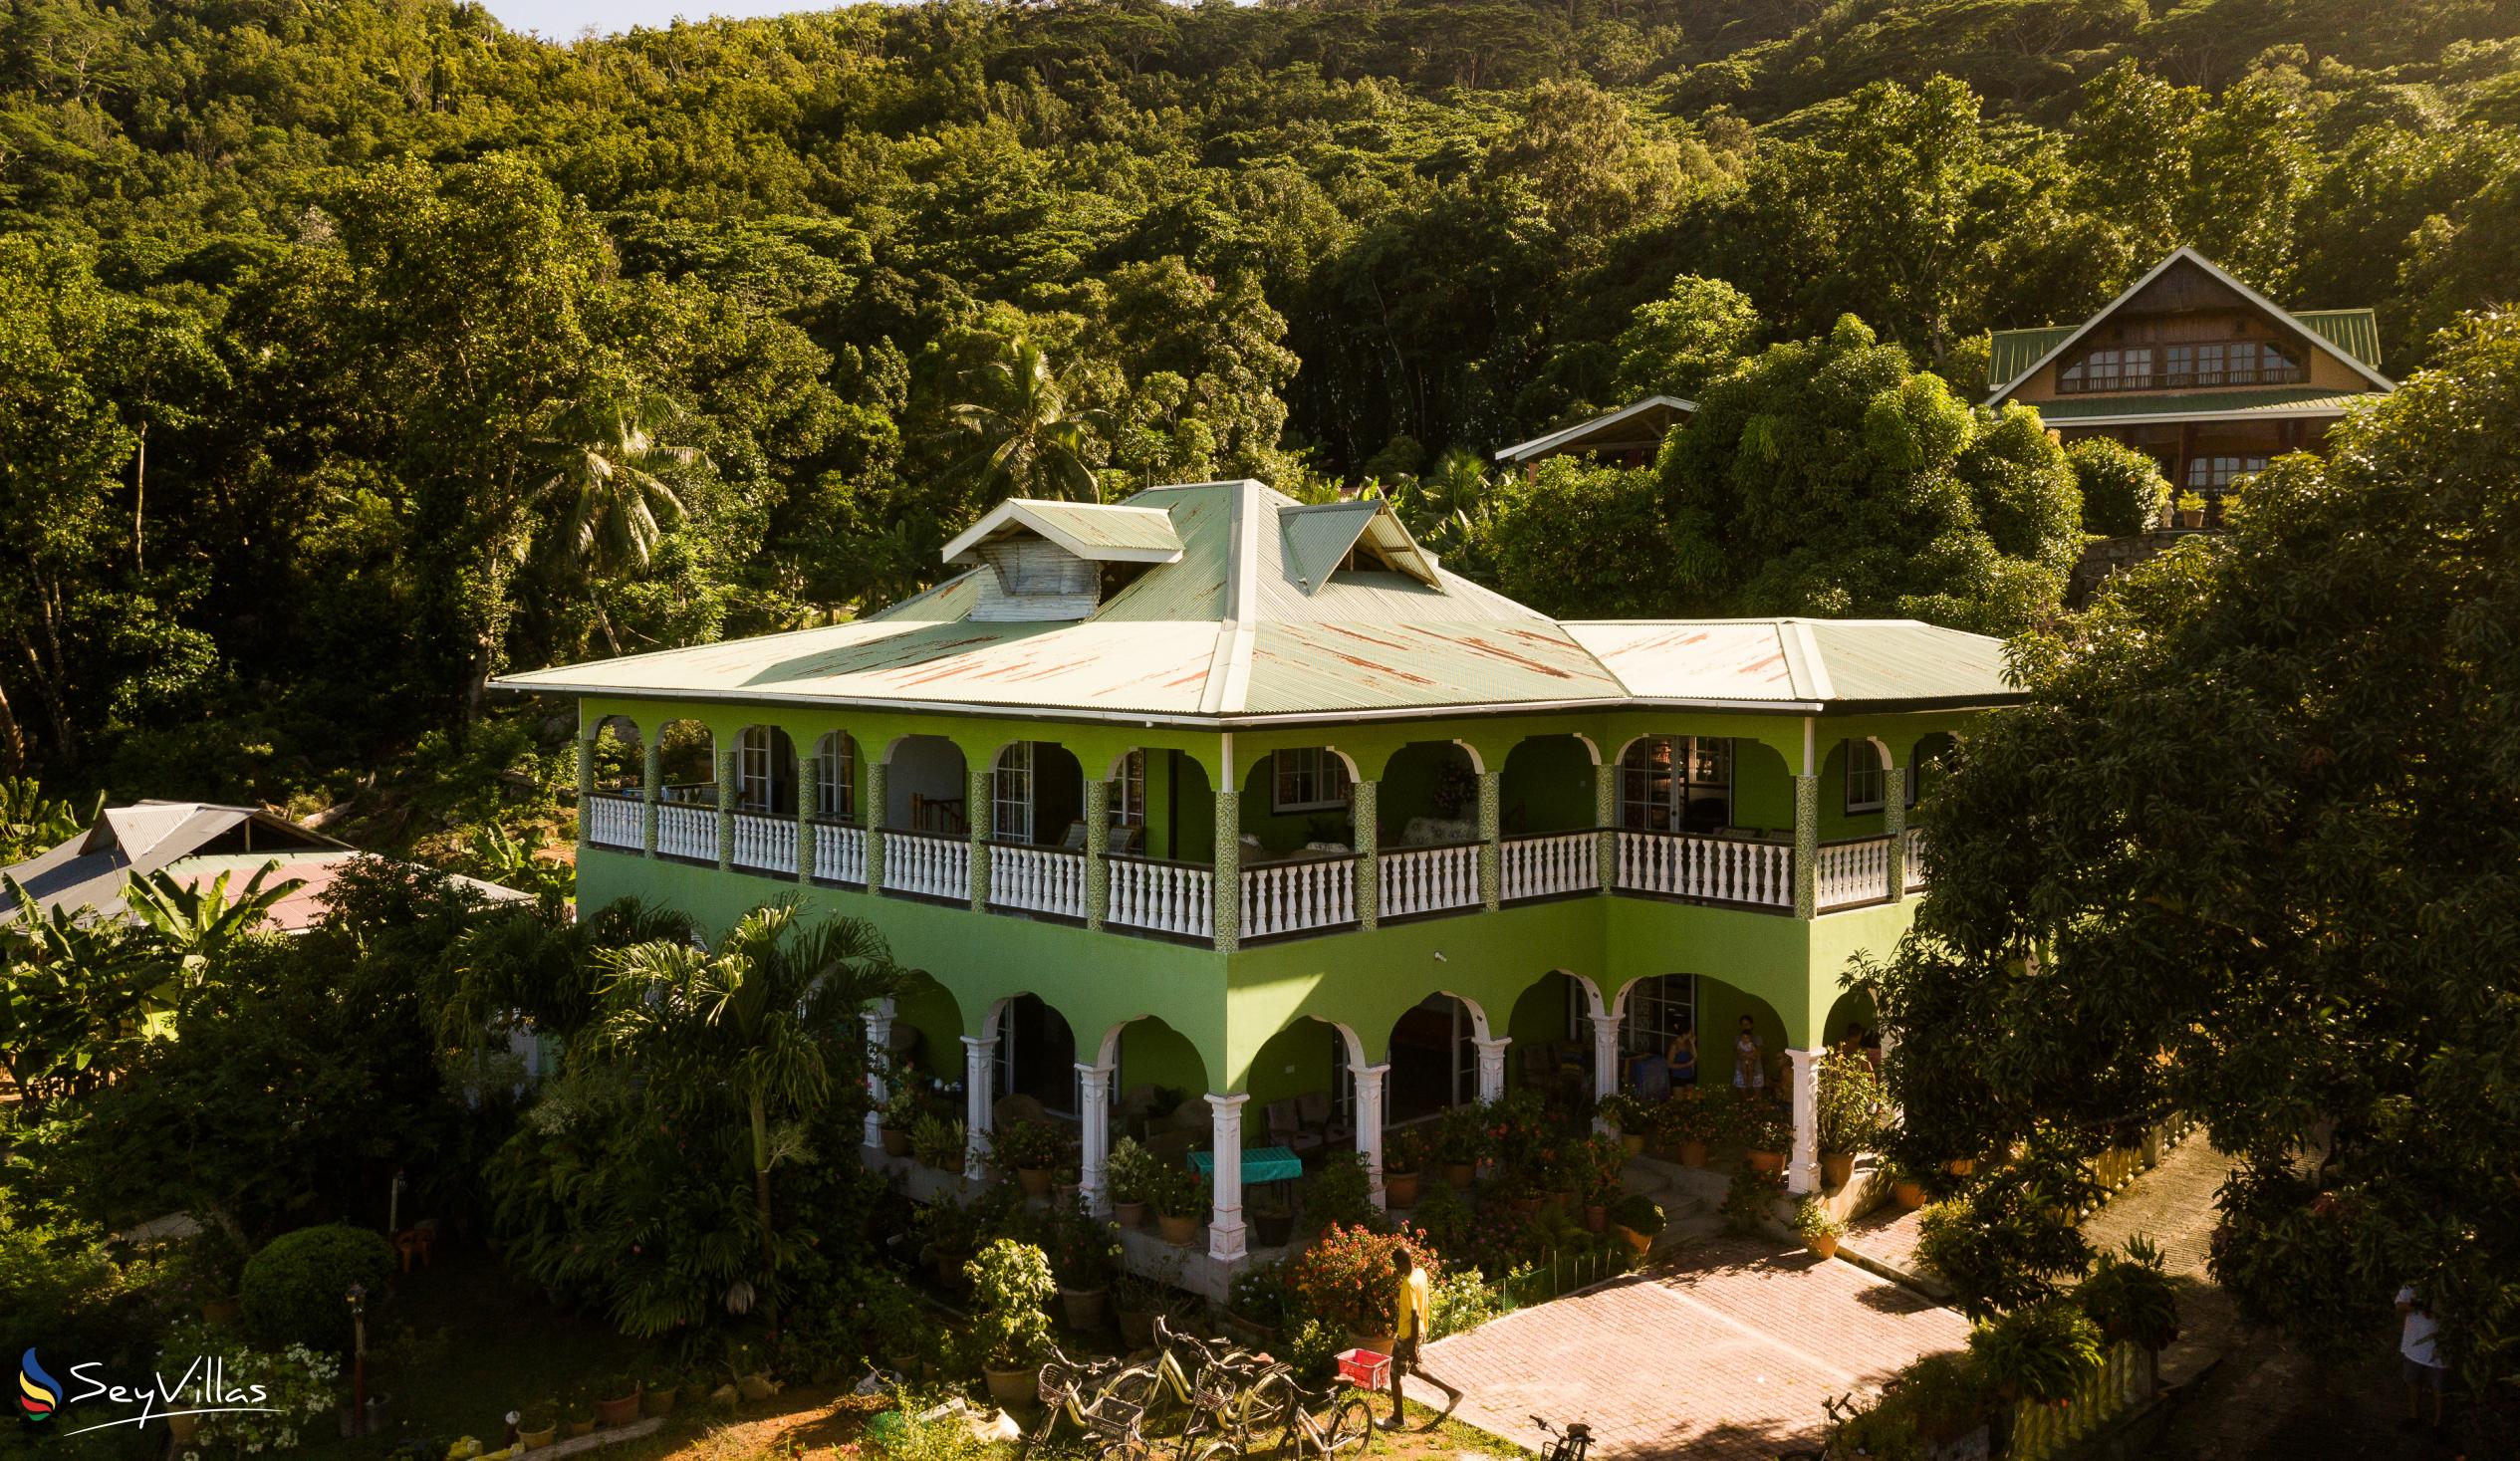 Foto 5: Villa Hortensia - Aussenbereich - La Digue (Seychellen)